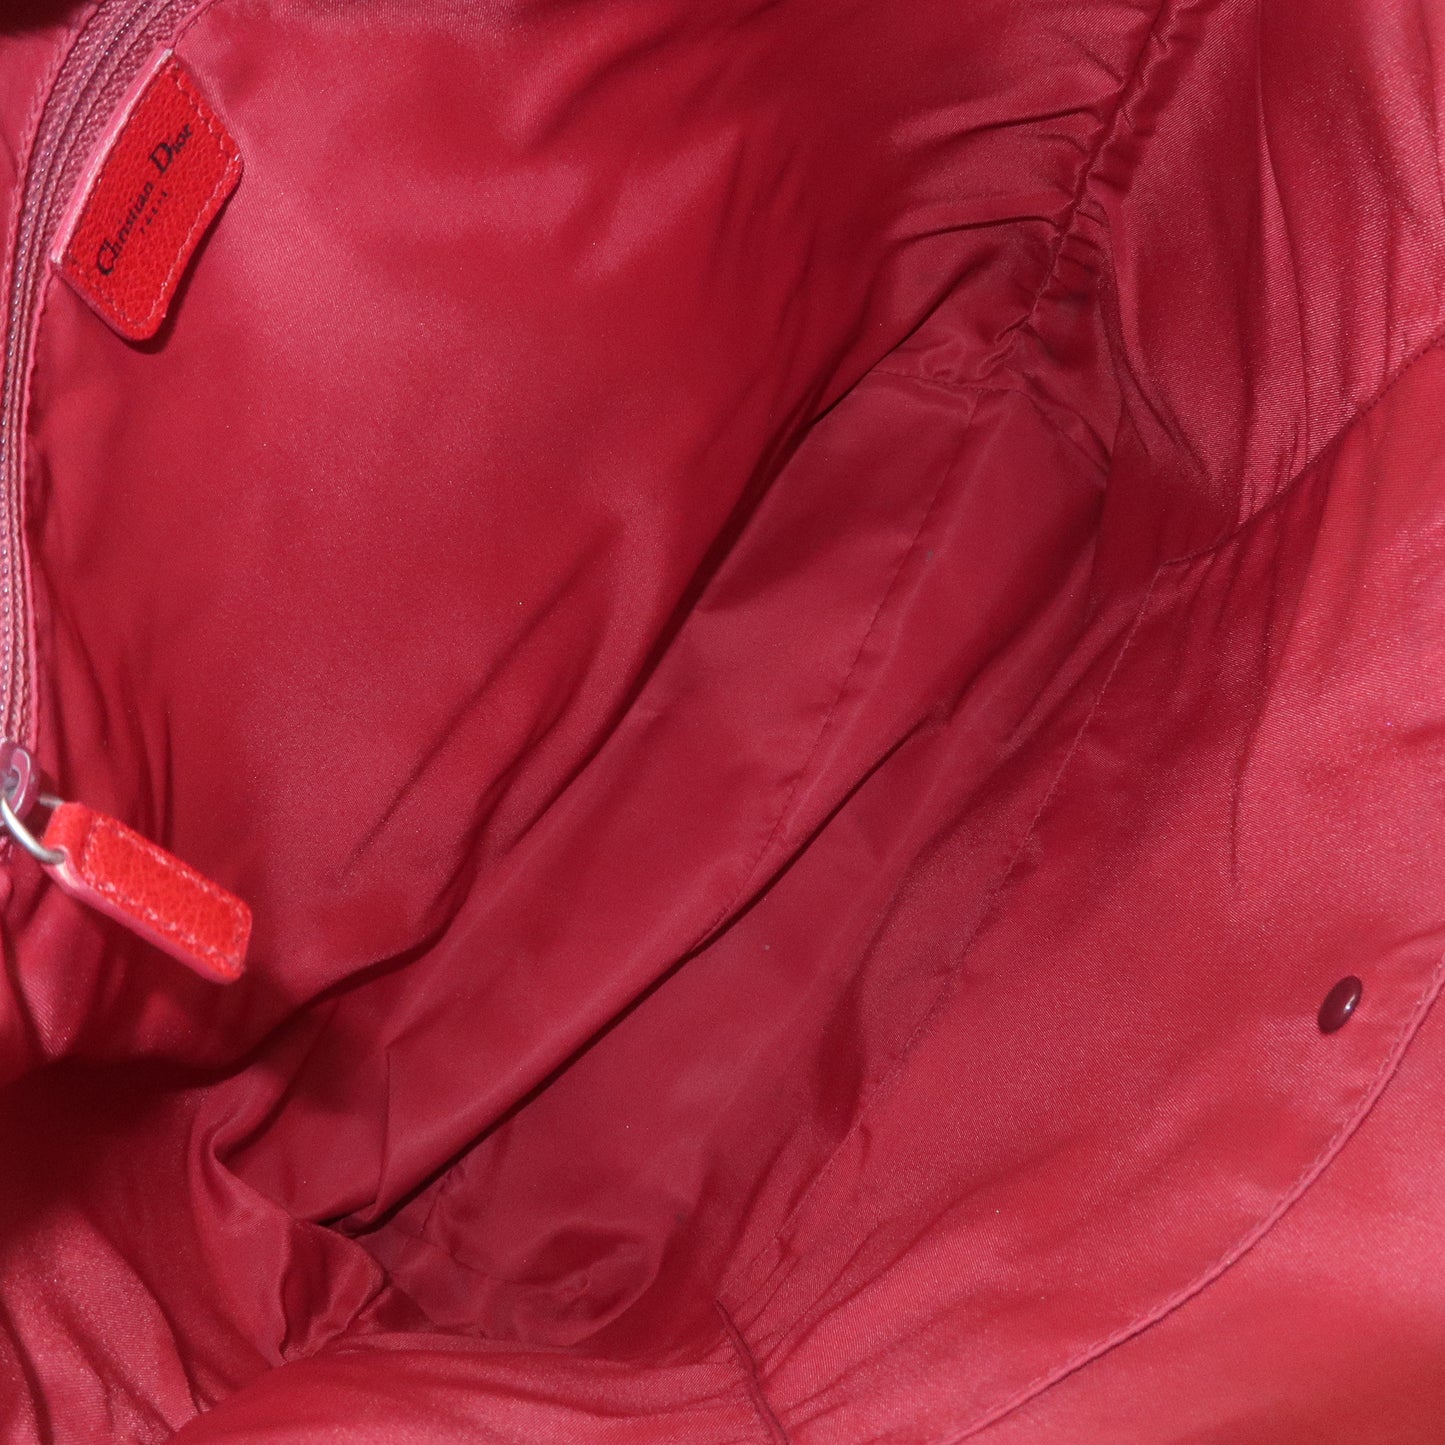 Christian Dior Rasta Line Trotter PVC Leather Tote Bag